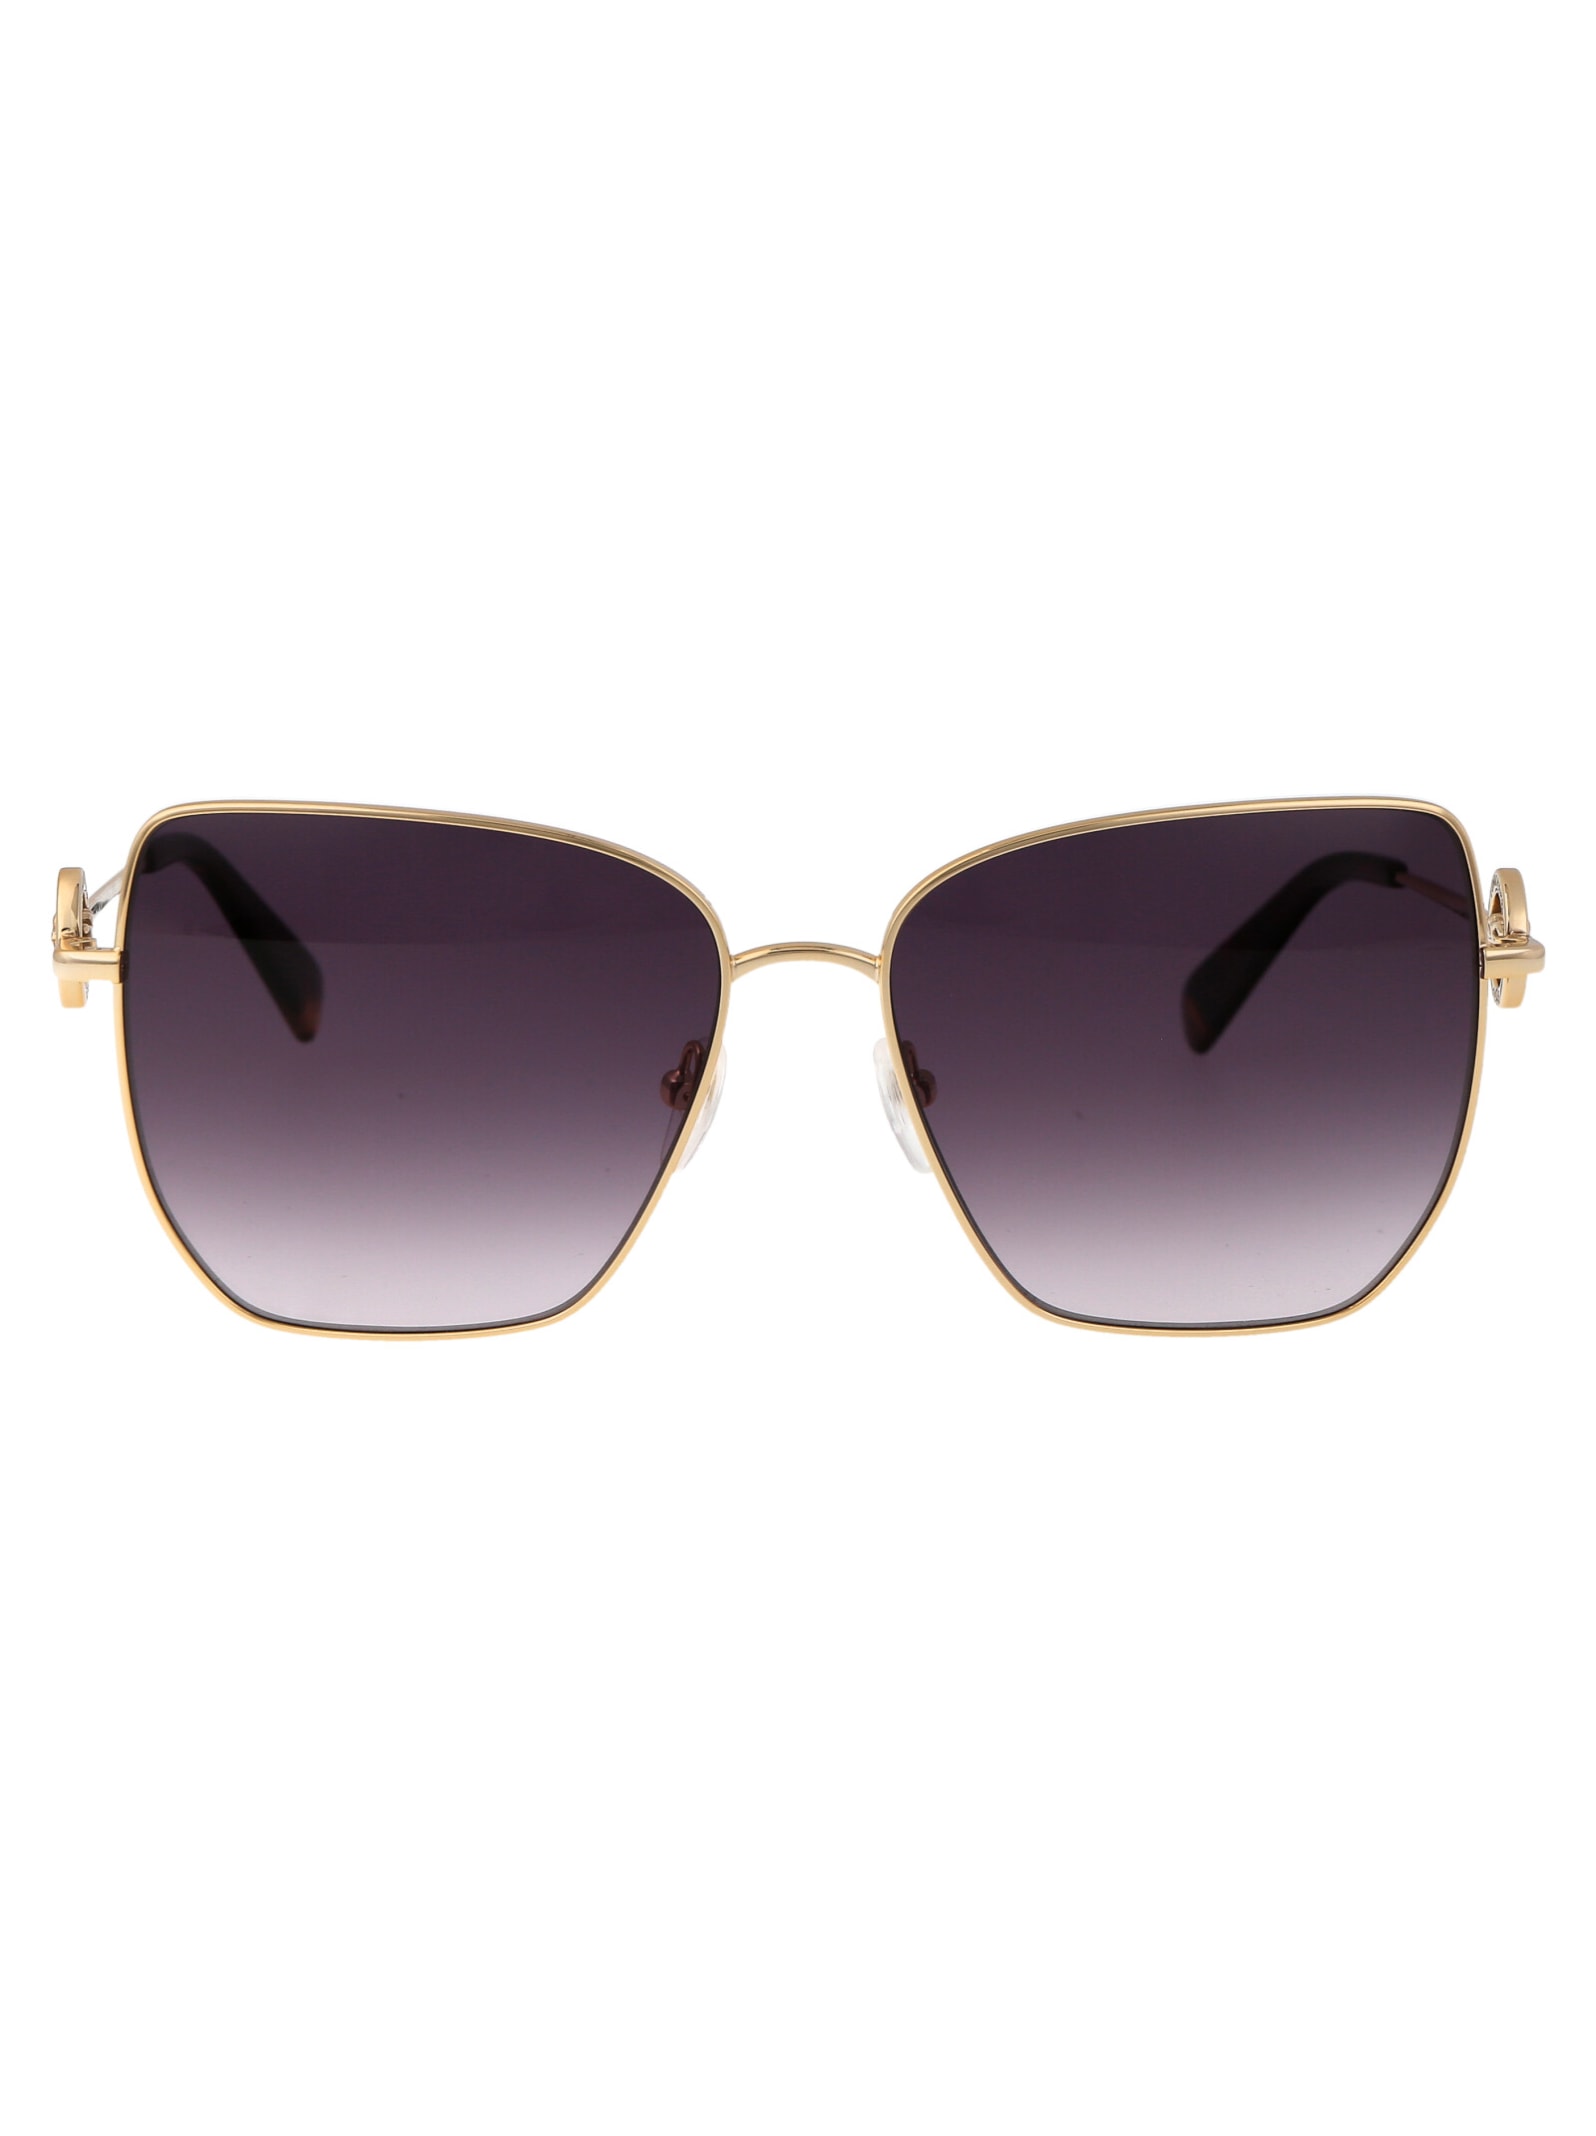 Longchamp Lo169s Sunglasses